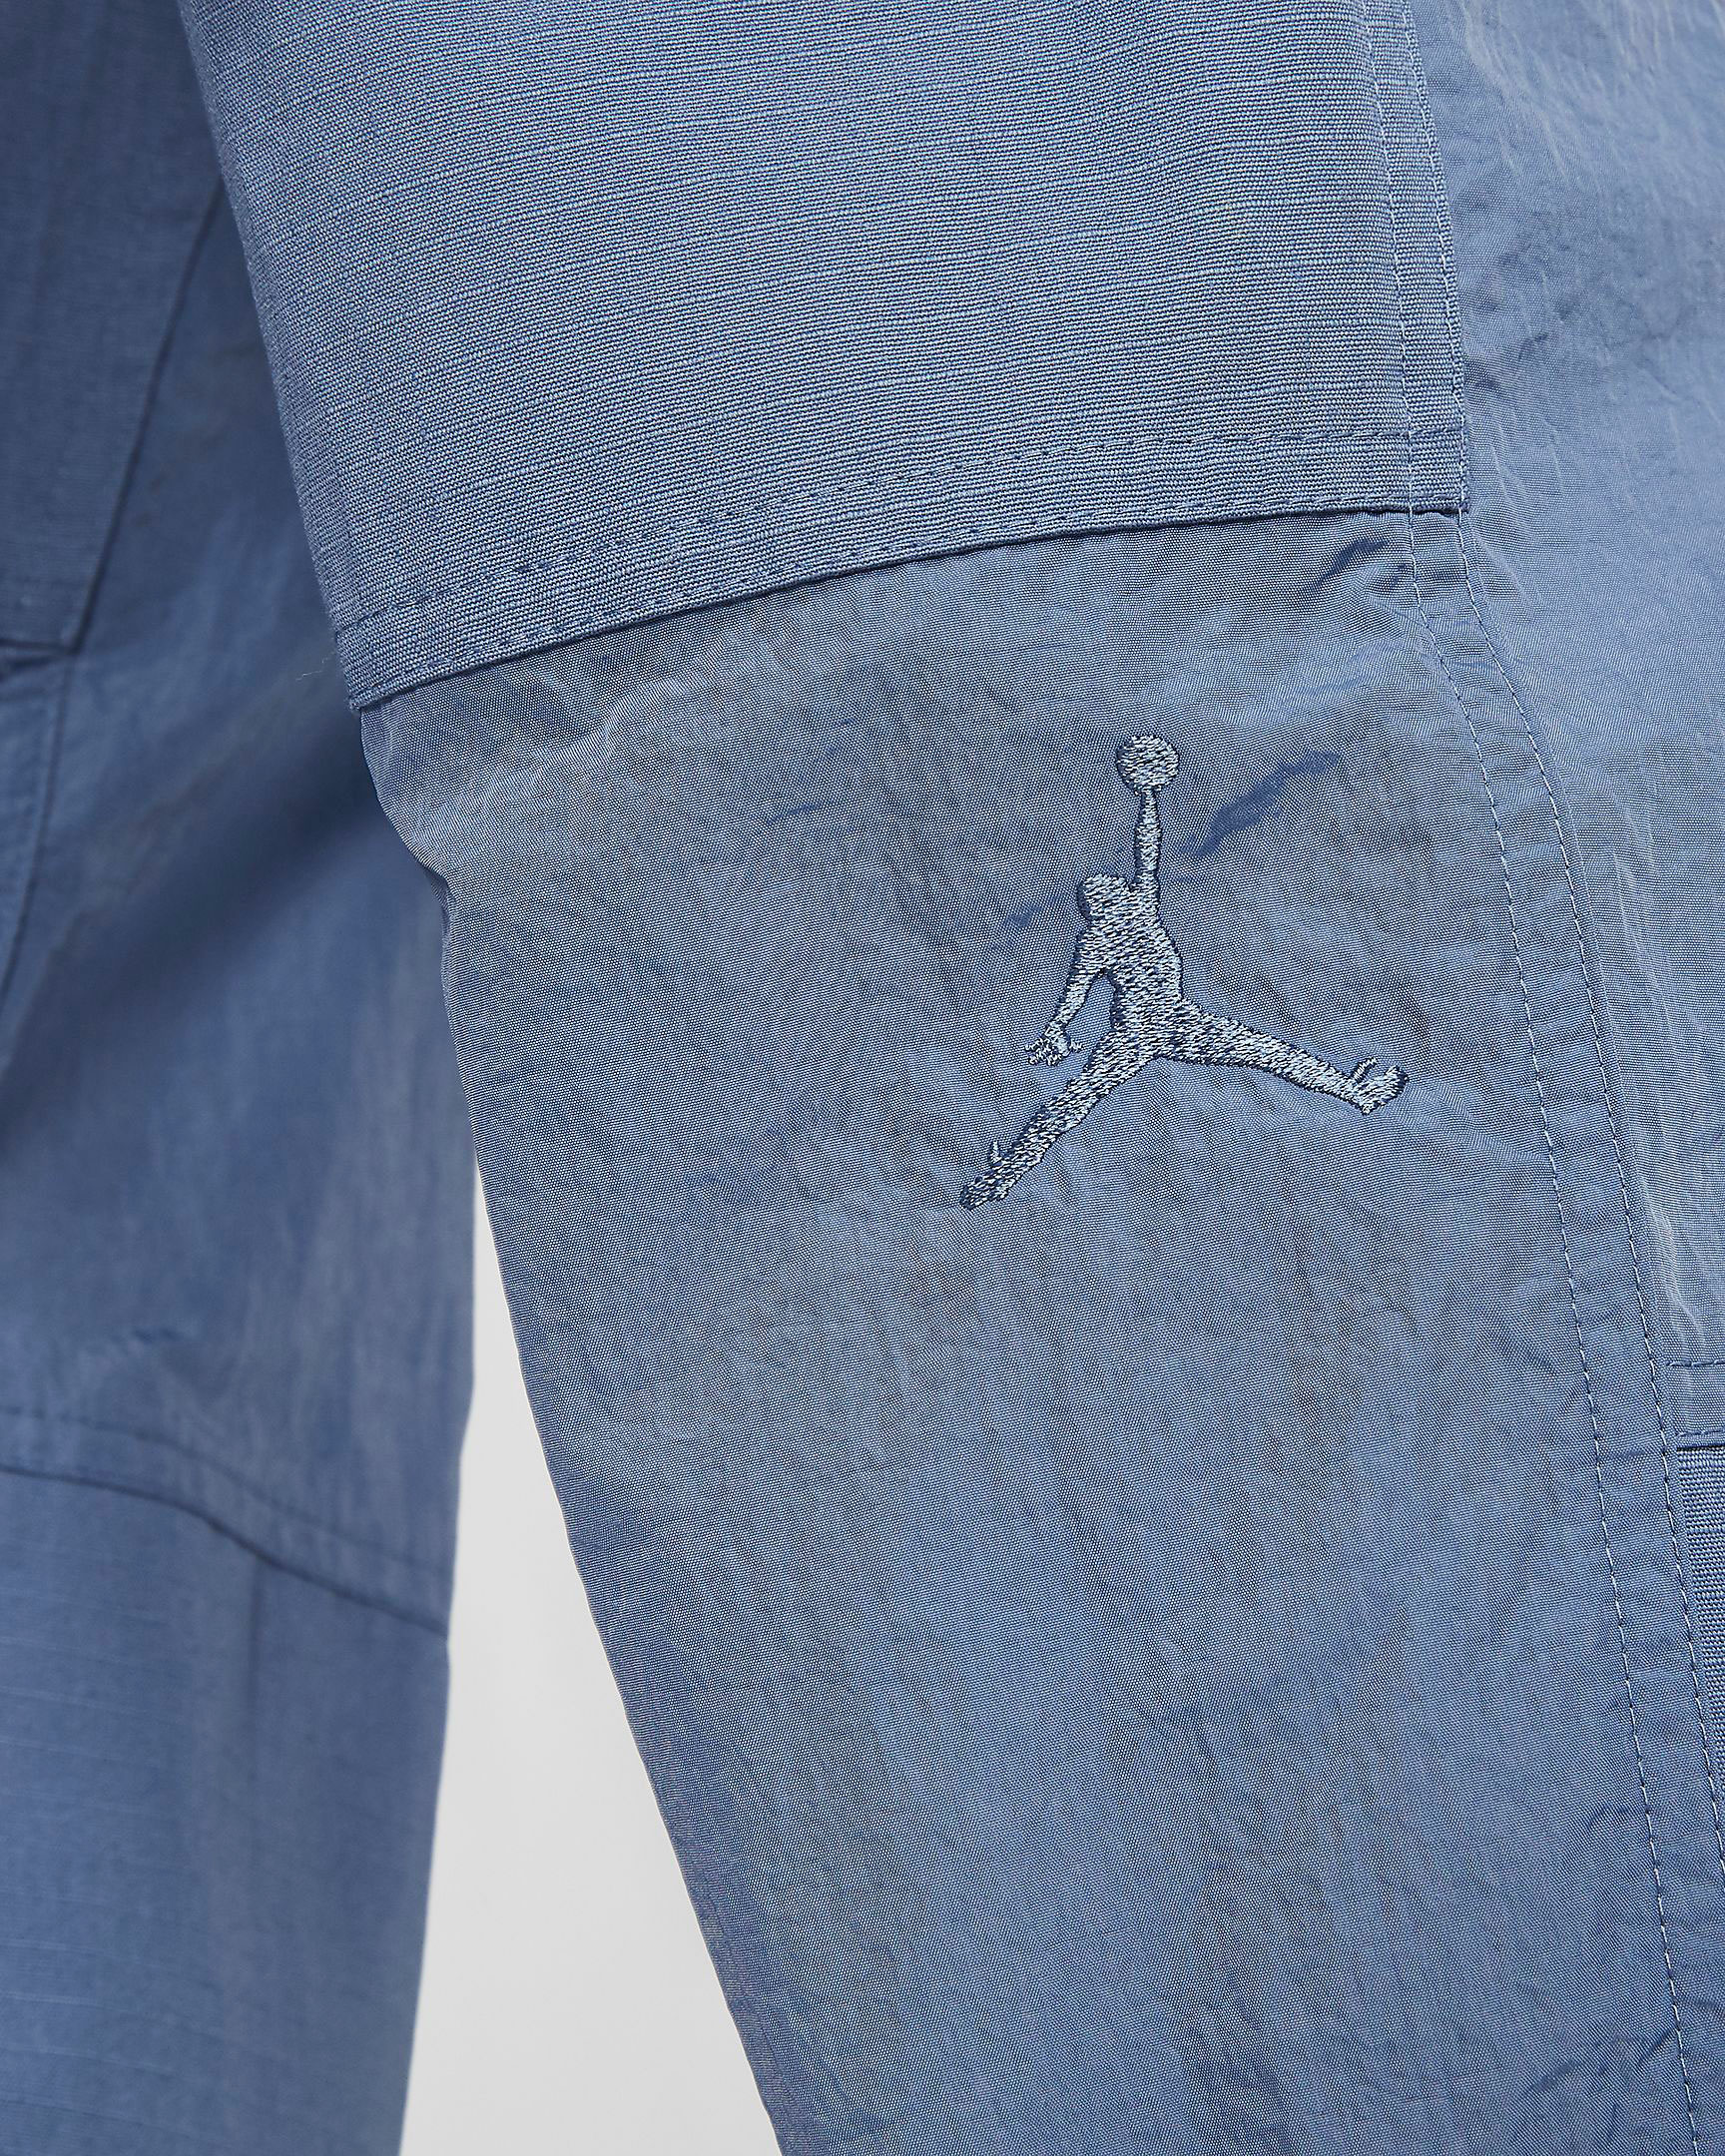 Air Jordan 3 UNC Pants to Match | SneakerFits.com